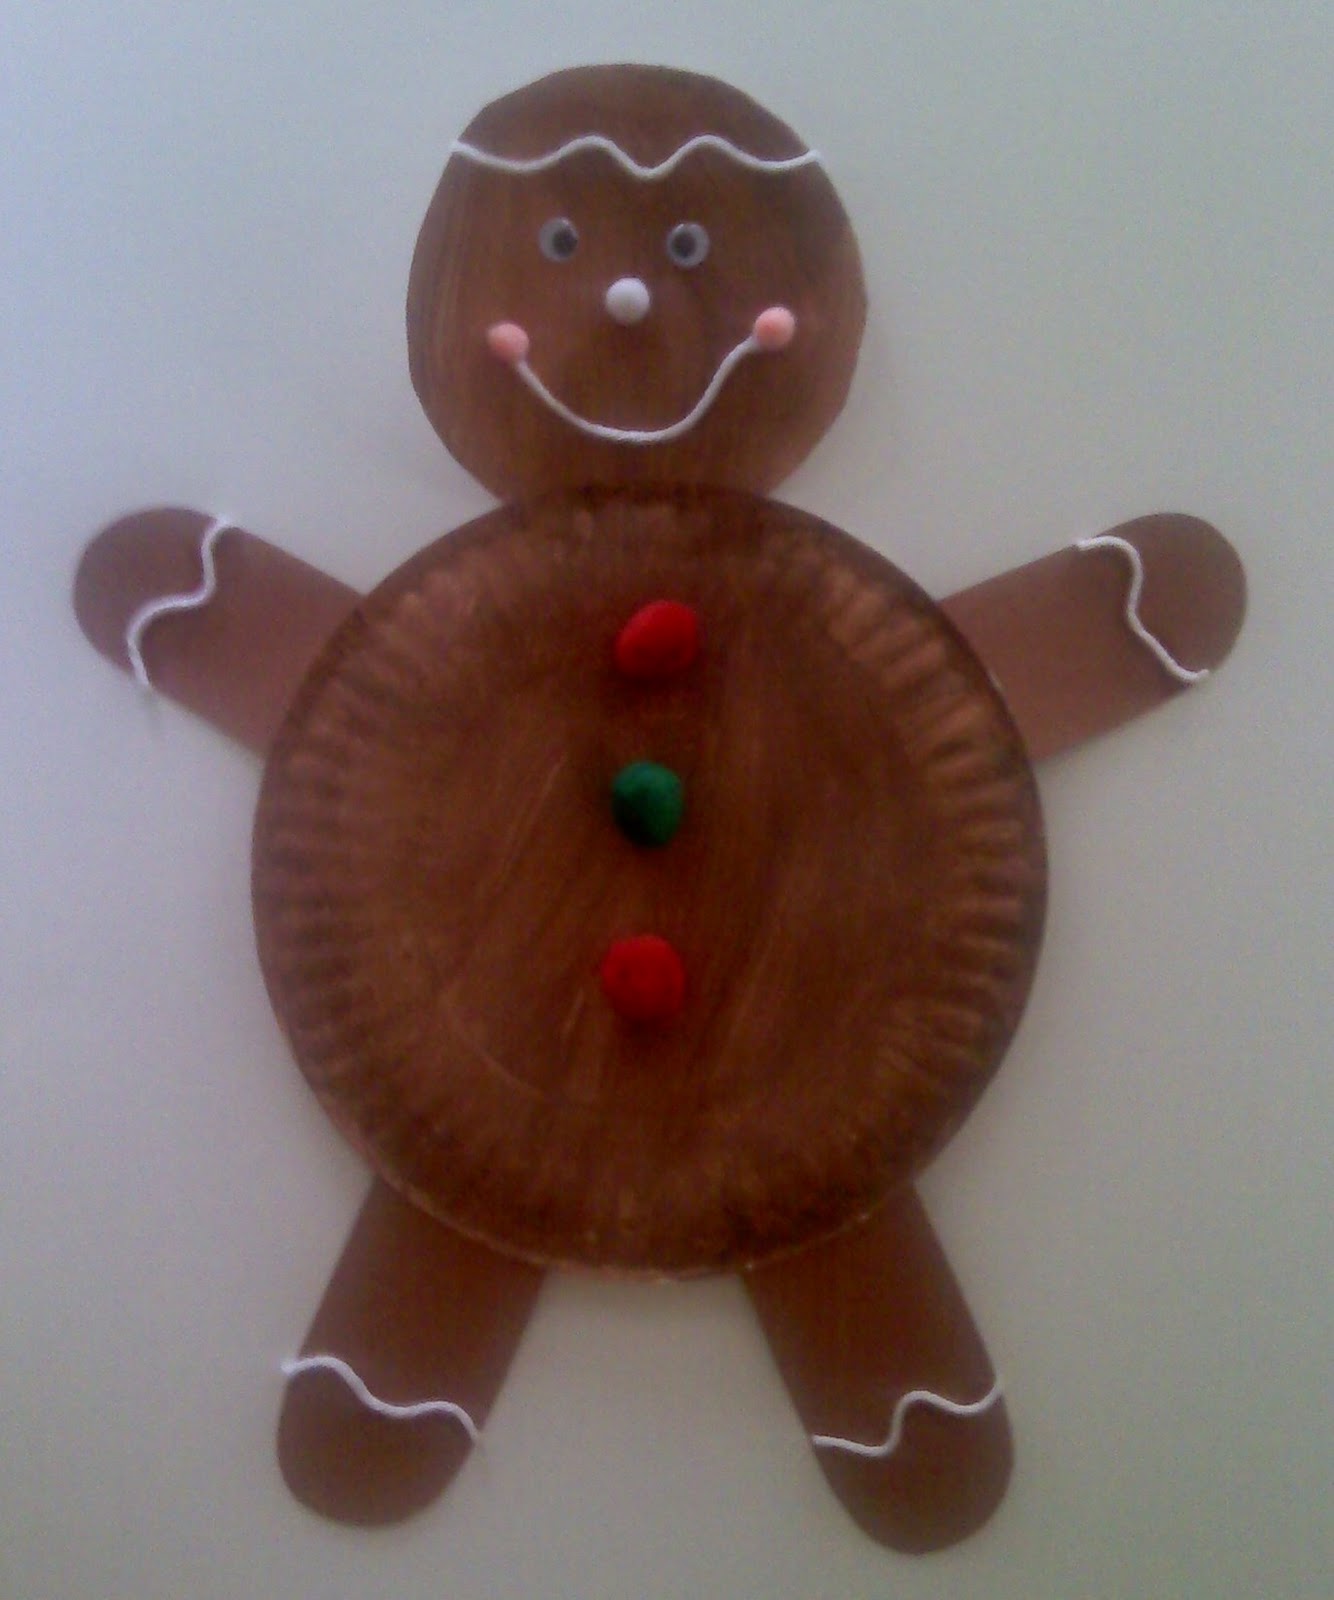  Crafts  For Preschoolers  Paper Plate Gingerbread  Man